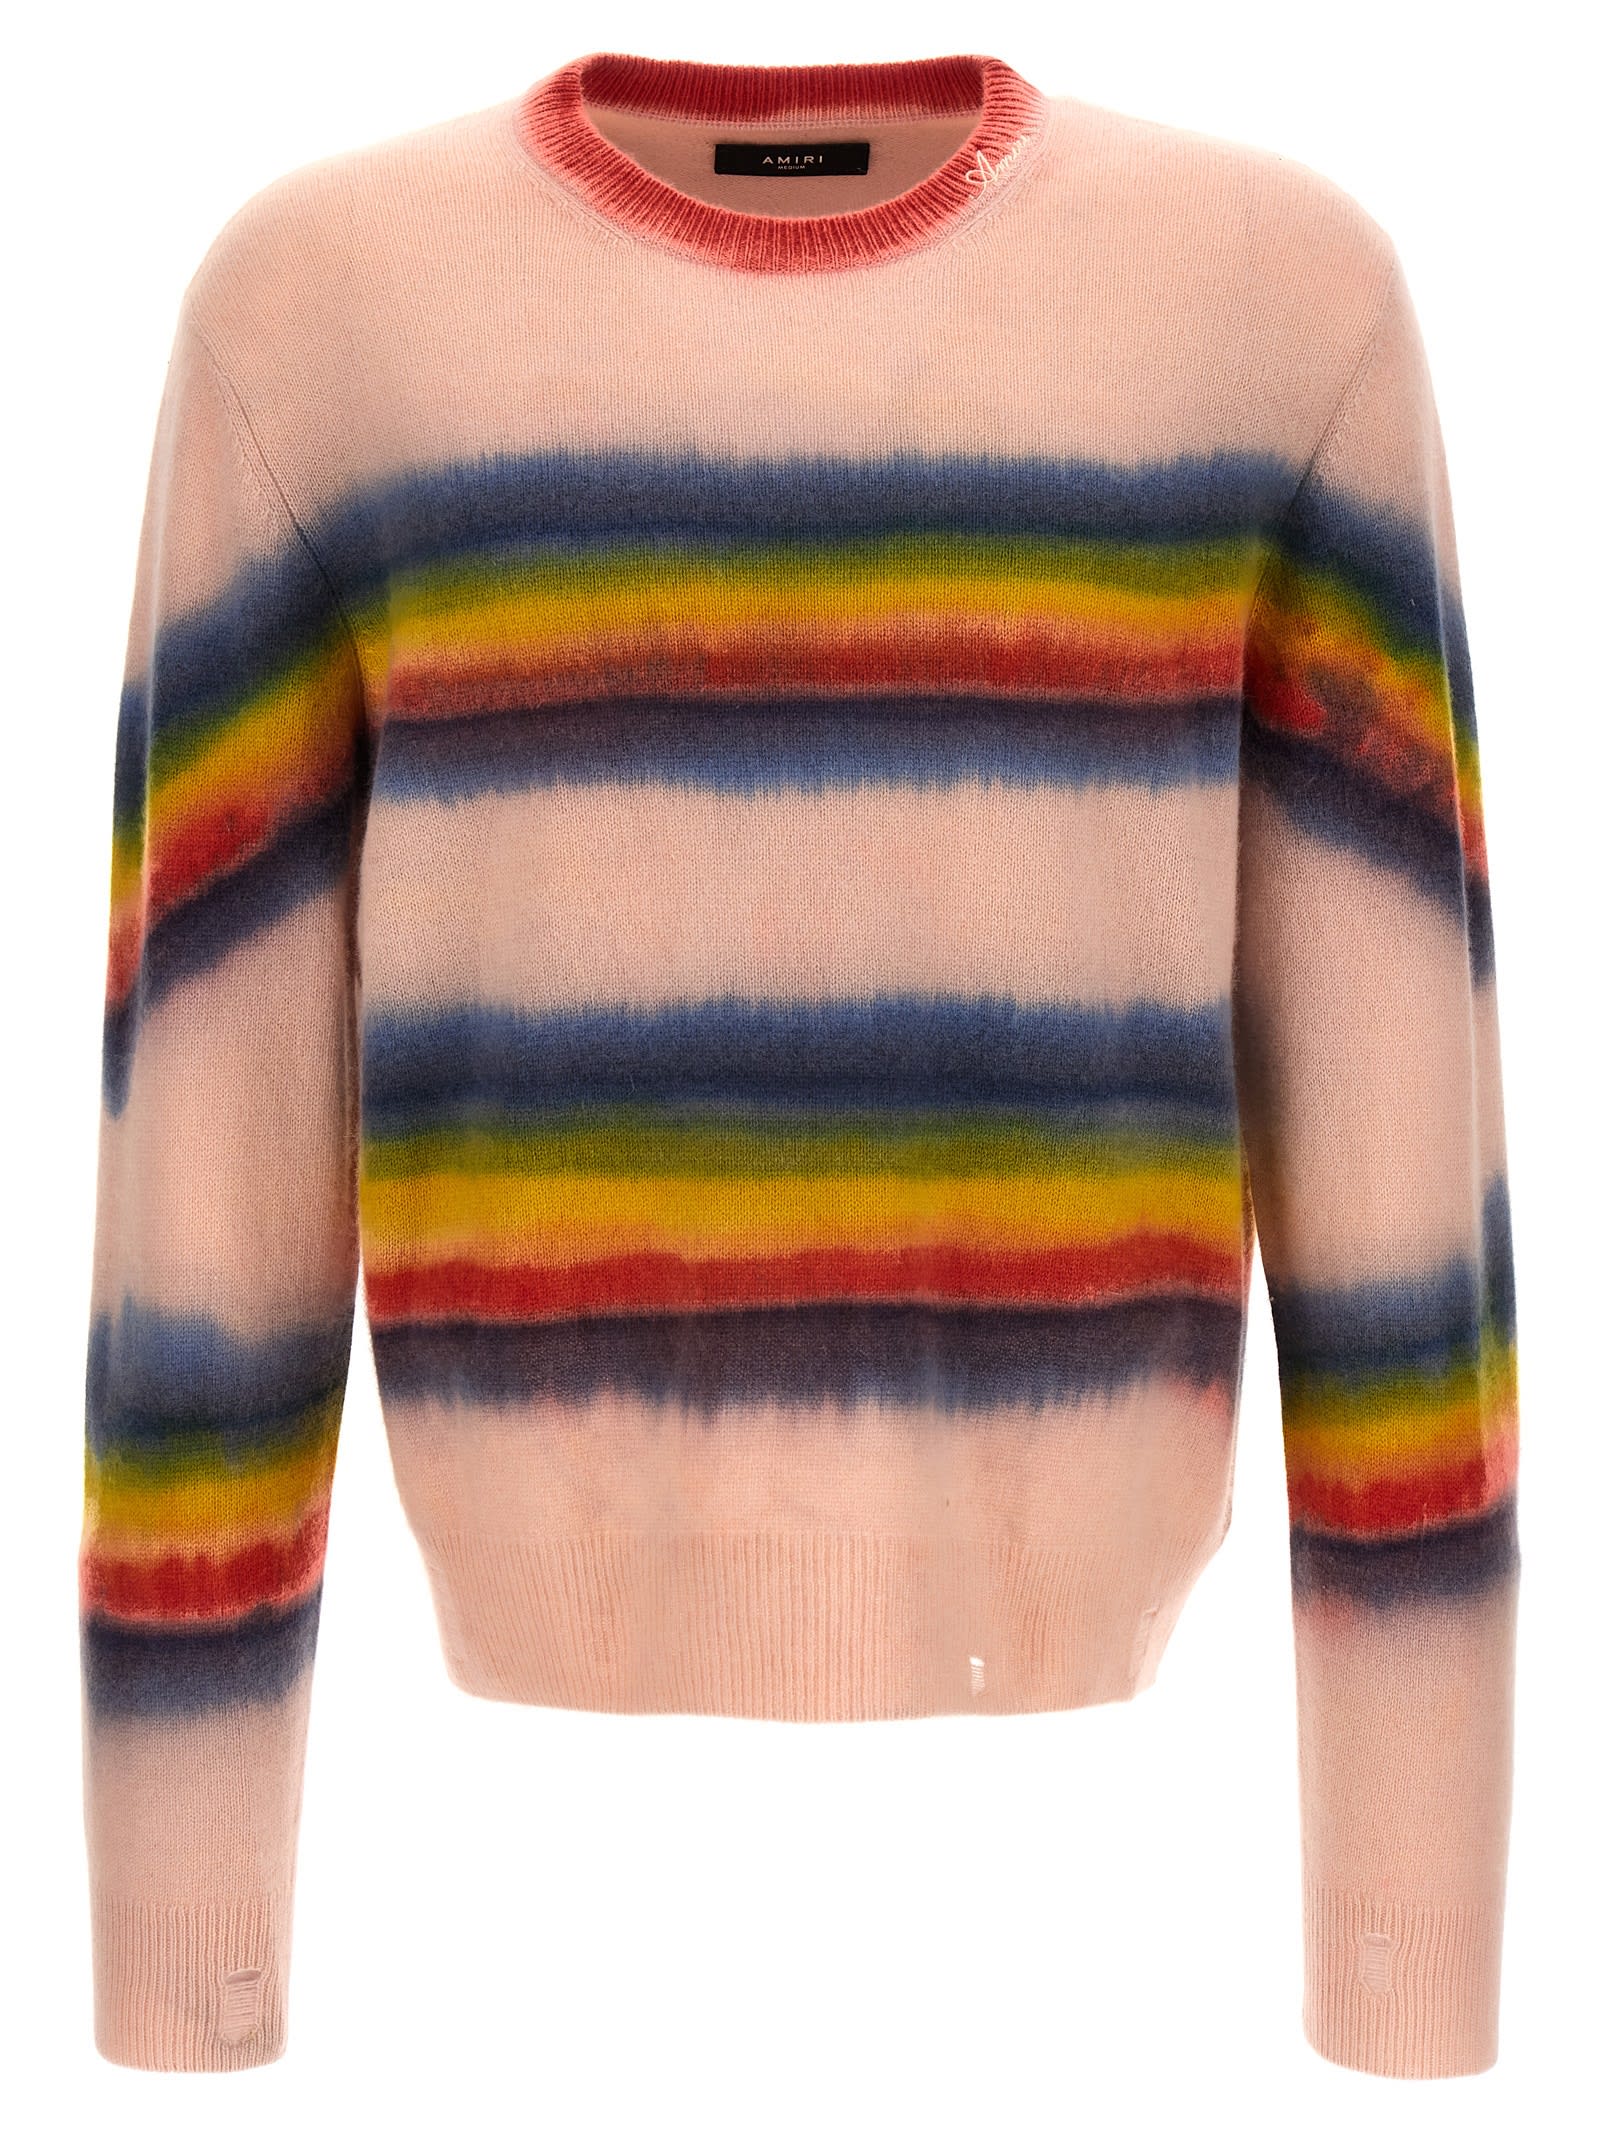 rainbow Tie Dye Sweater